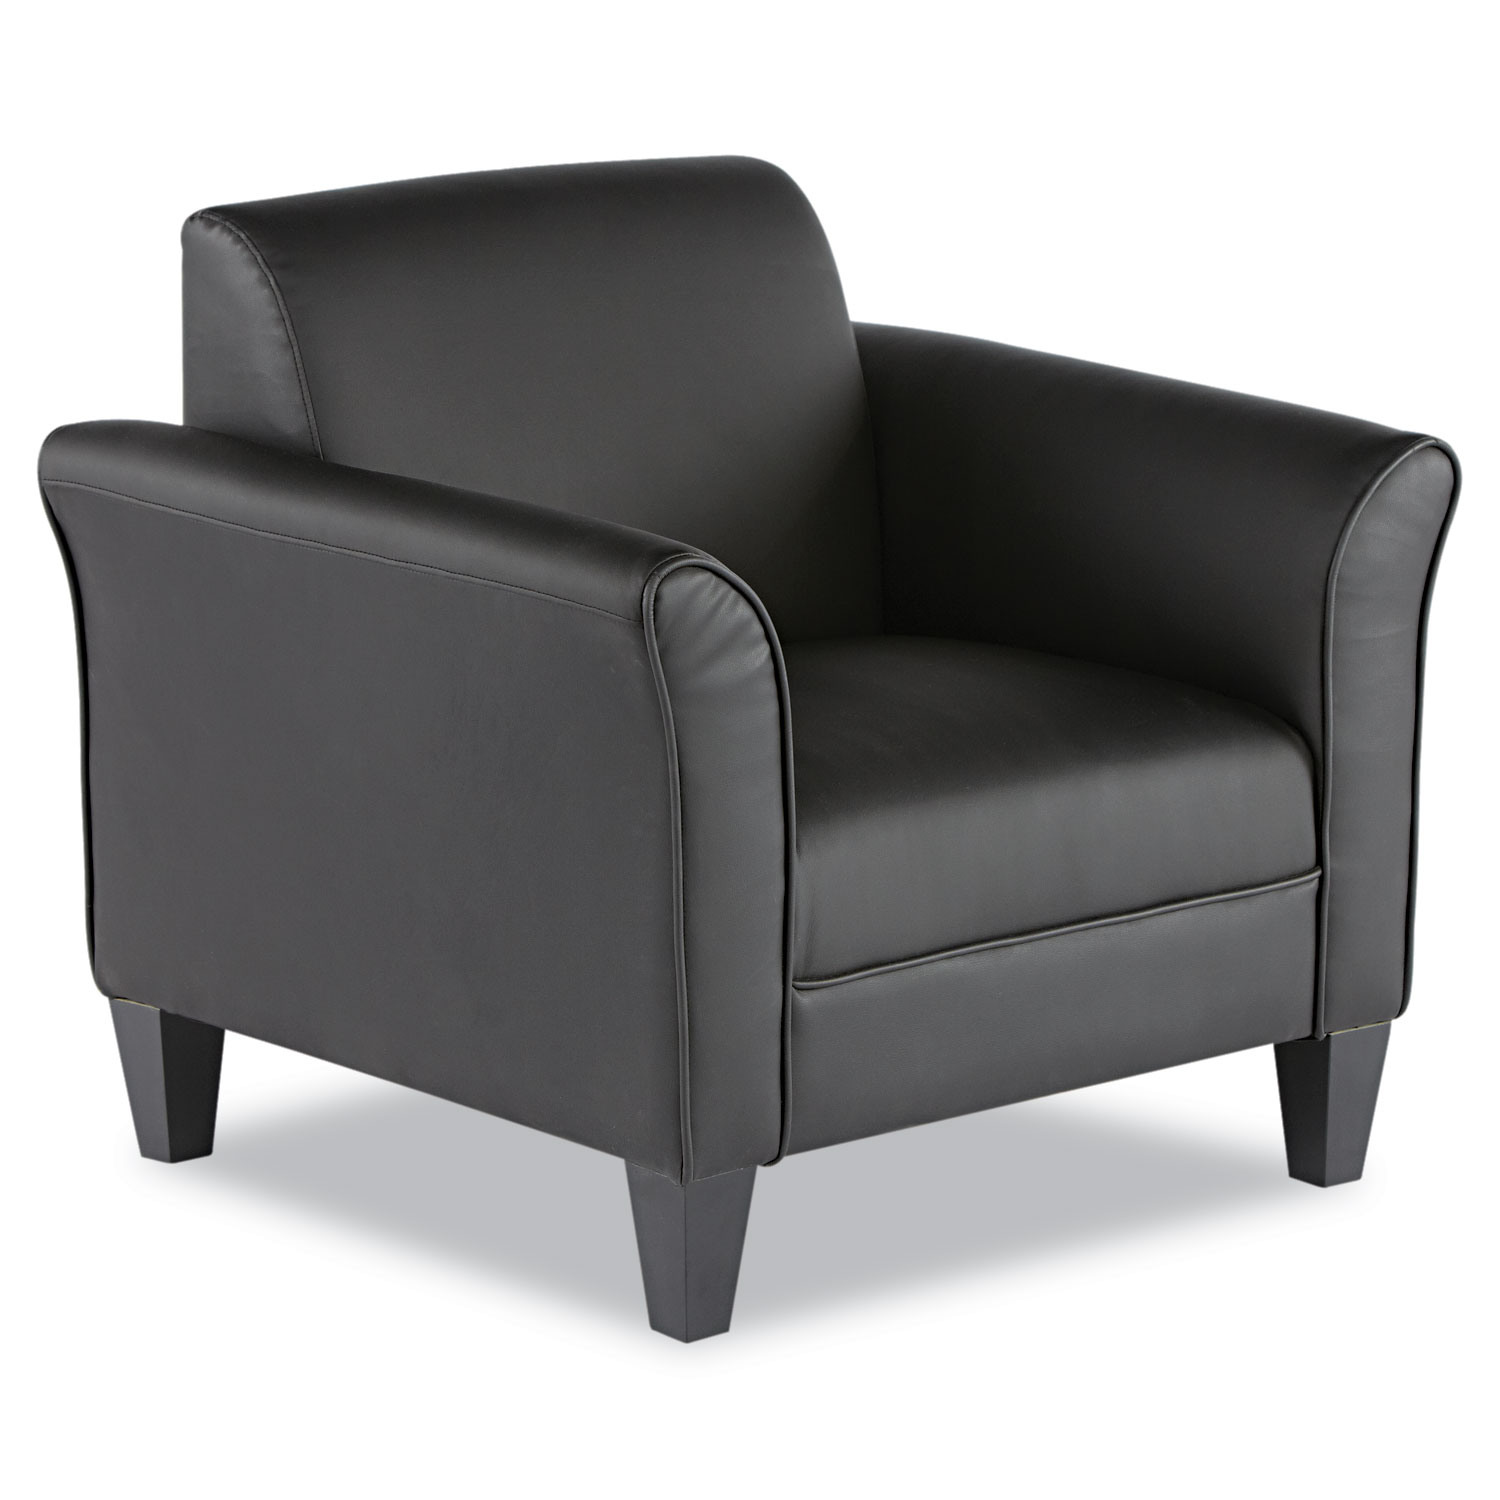  Alera ALERL23LS10B Alera Reception Lounge Sofa Series Club Chair, 35.43'' x 30.70'' x 32.28'', Black Seat/Black Back, Black Base (ALERL23LS10B) 